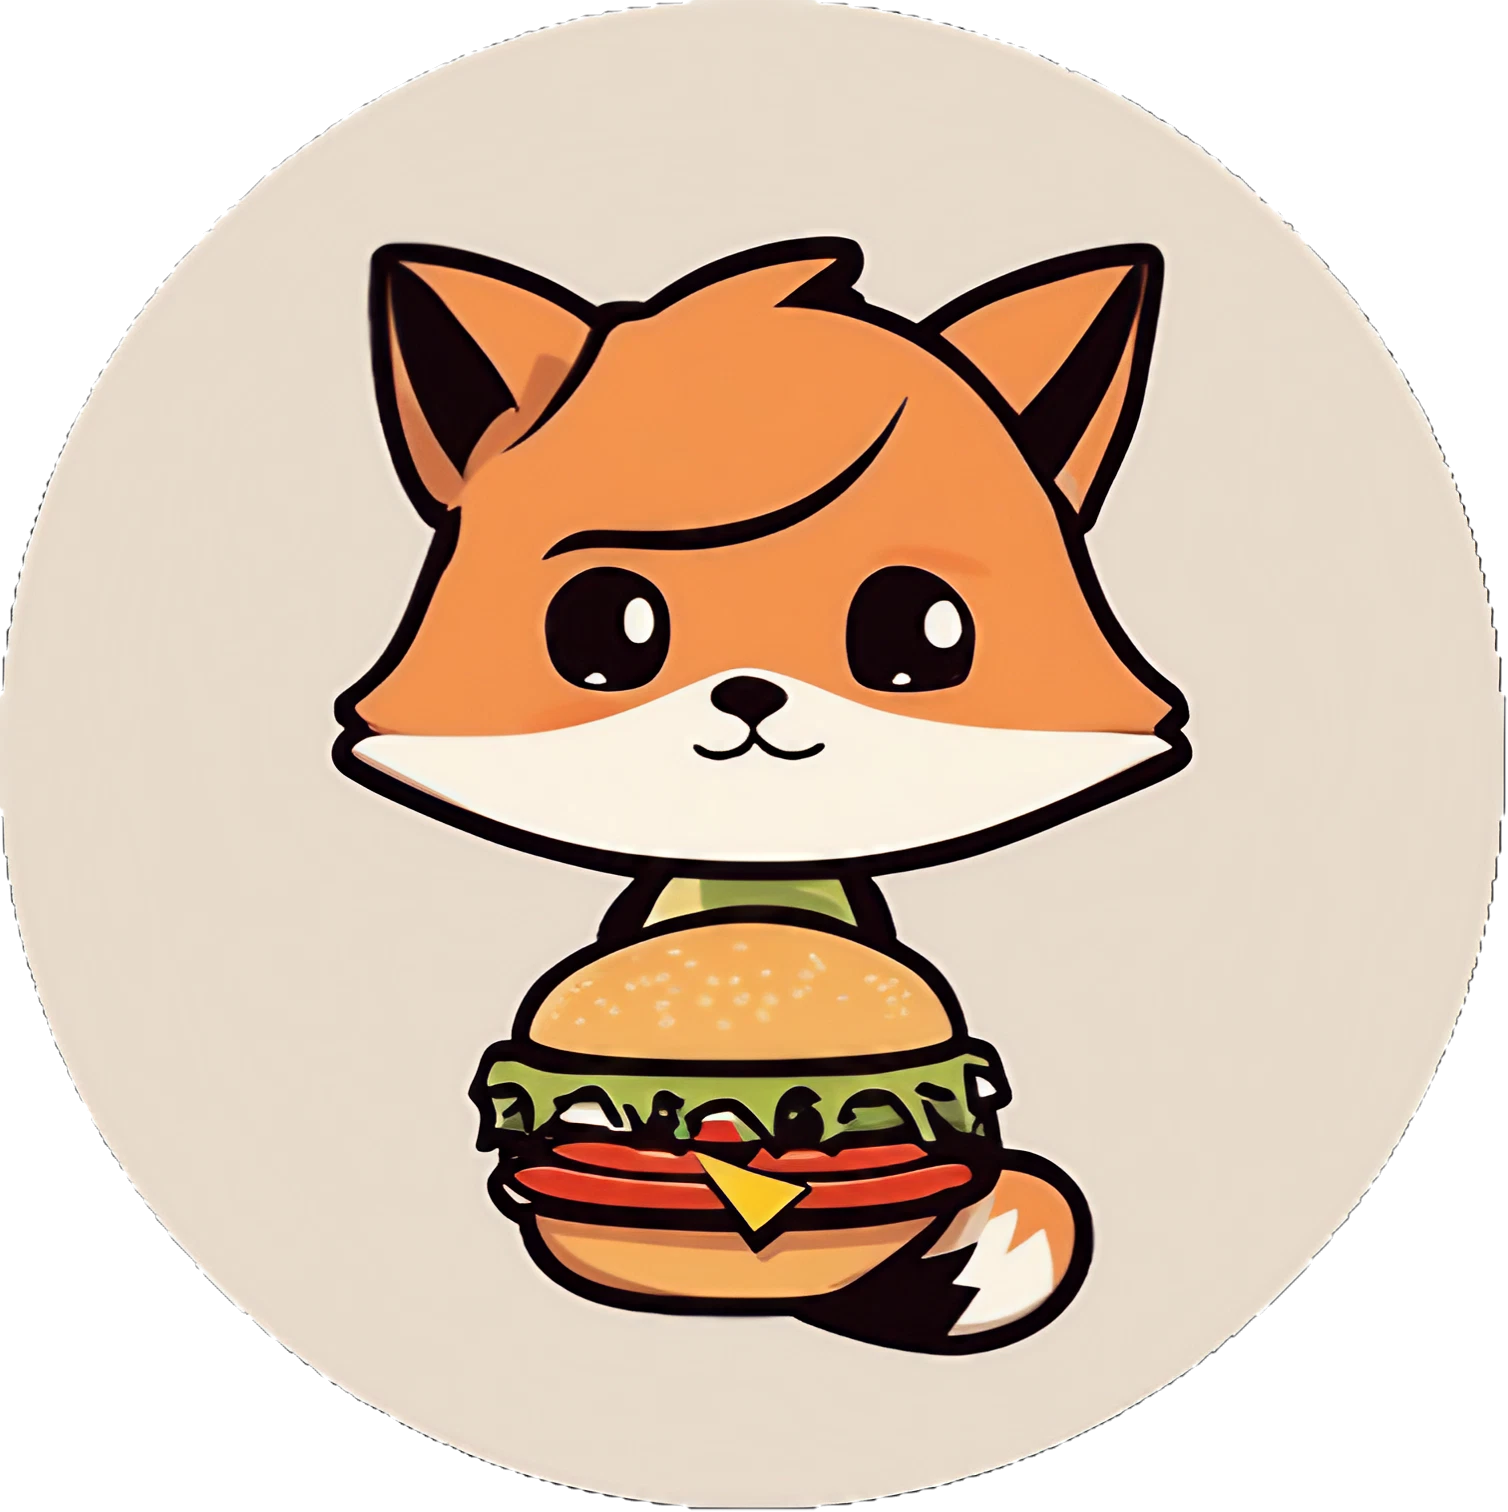 Cute Kawaii Anime Fuchs mit Cheeseburger - Supersüß - Sticker - 3x3cm